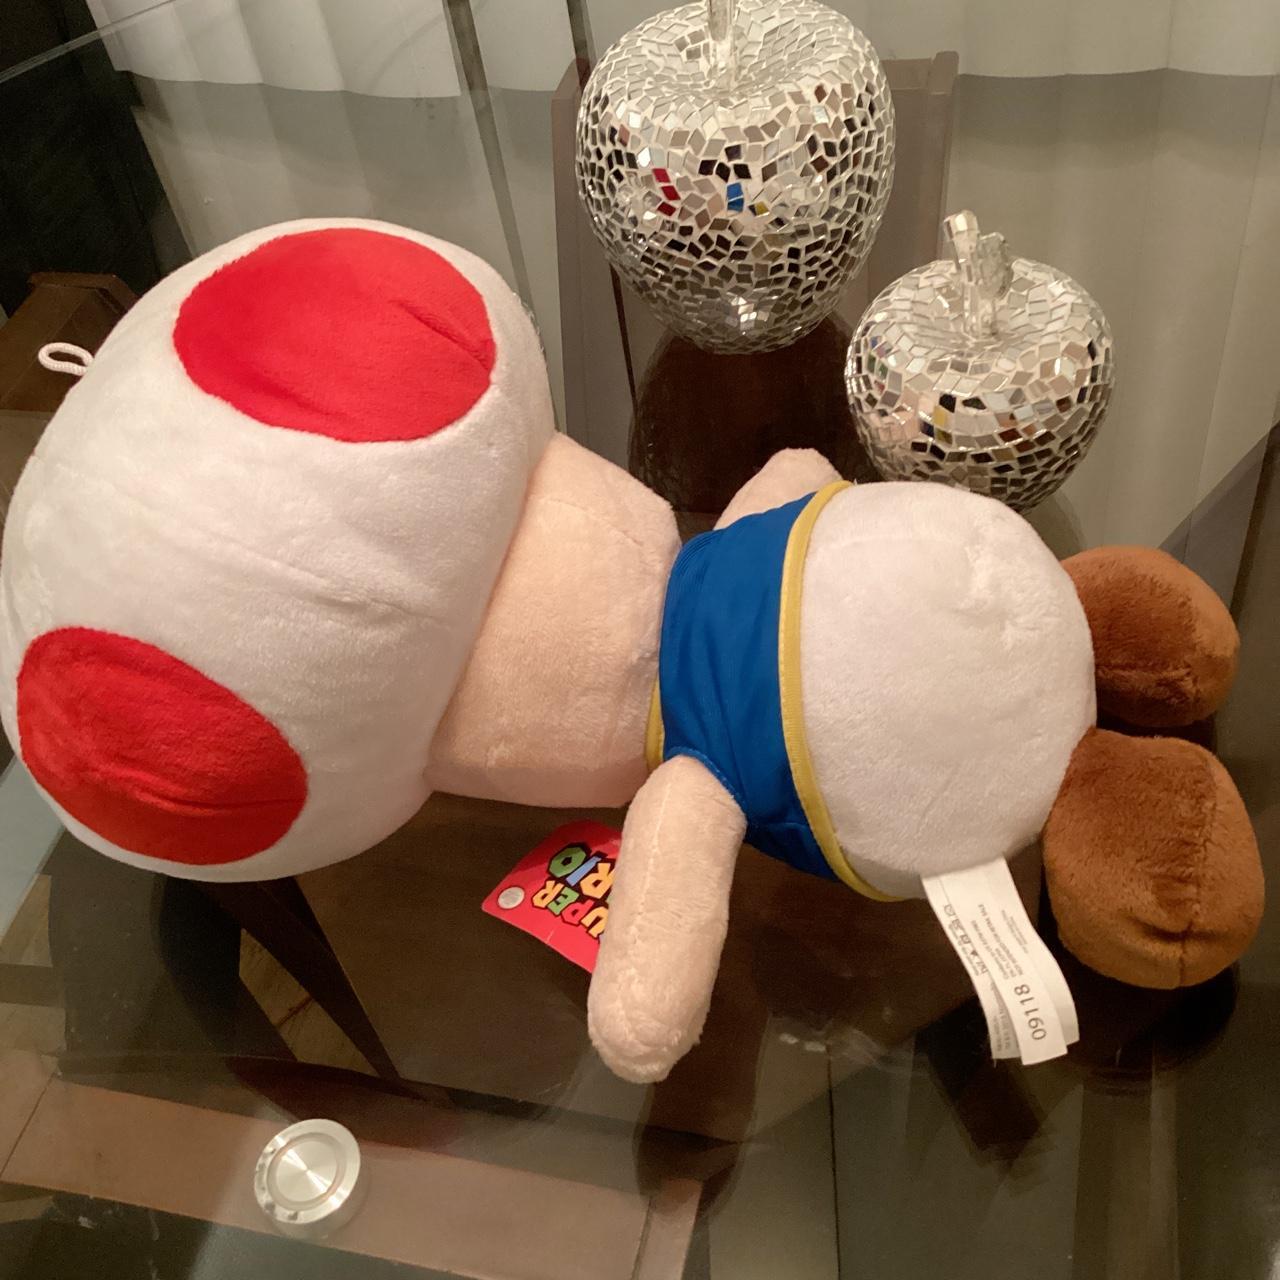 Super Mario Brothers Red Toad 16”Plush Mushroom Toy - Depop